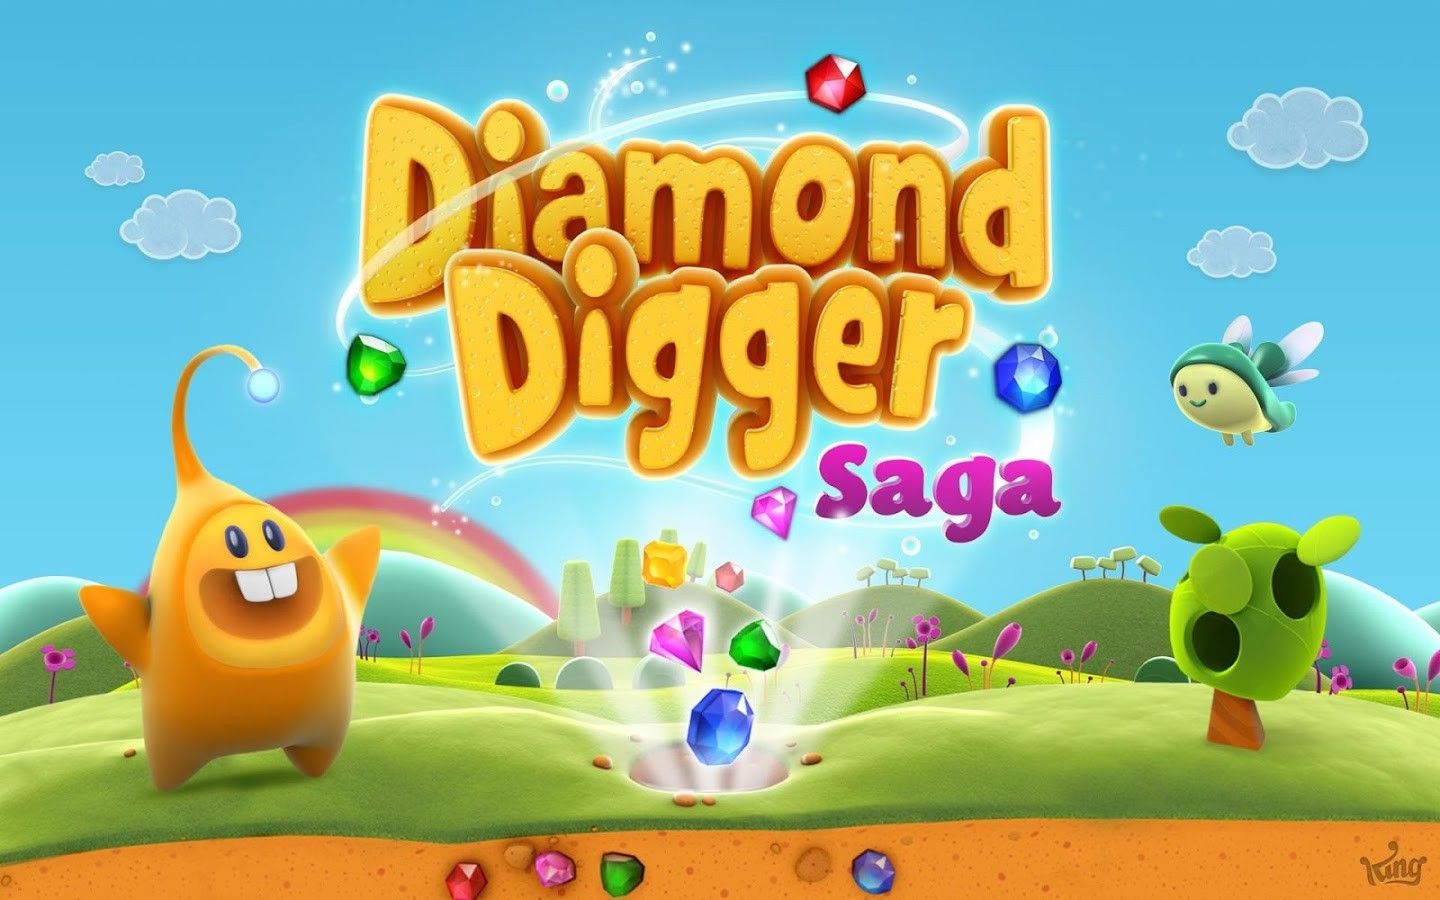 Diamond Digger. Digger Saga. Digger (игра). Даймонд диггер игра.